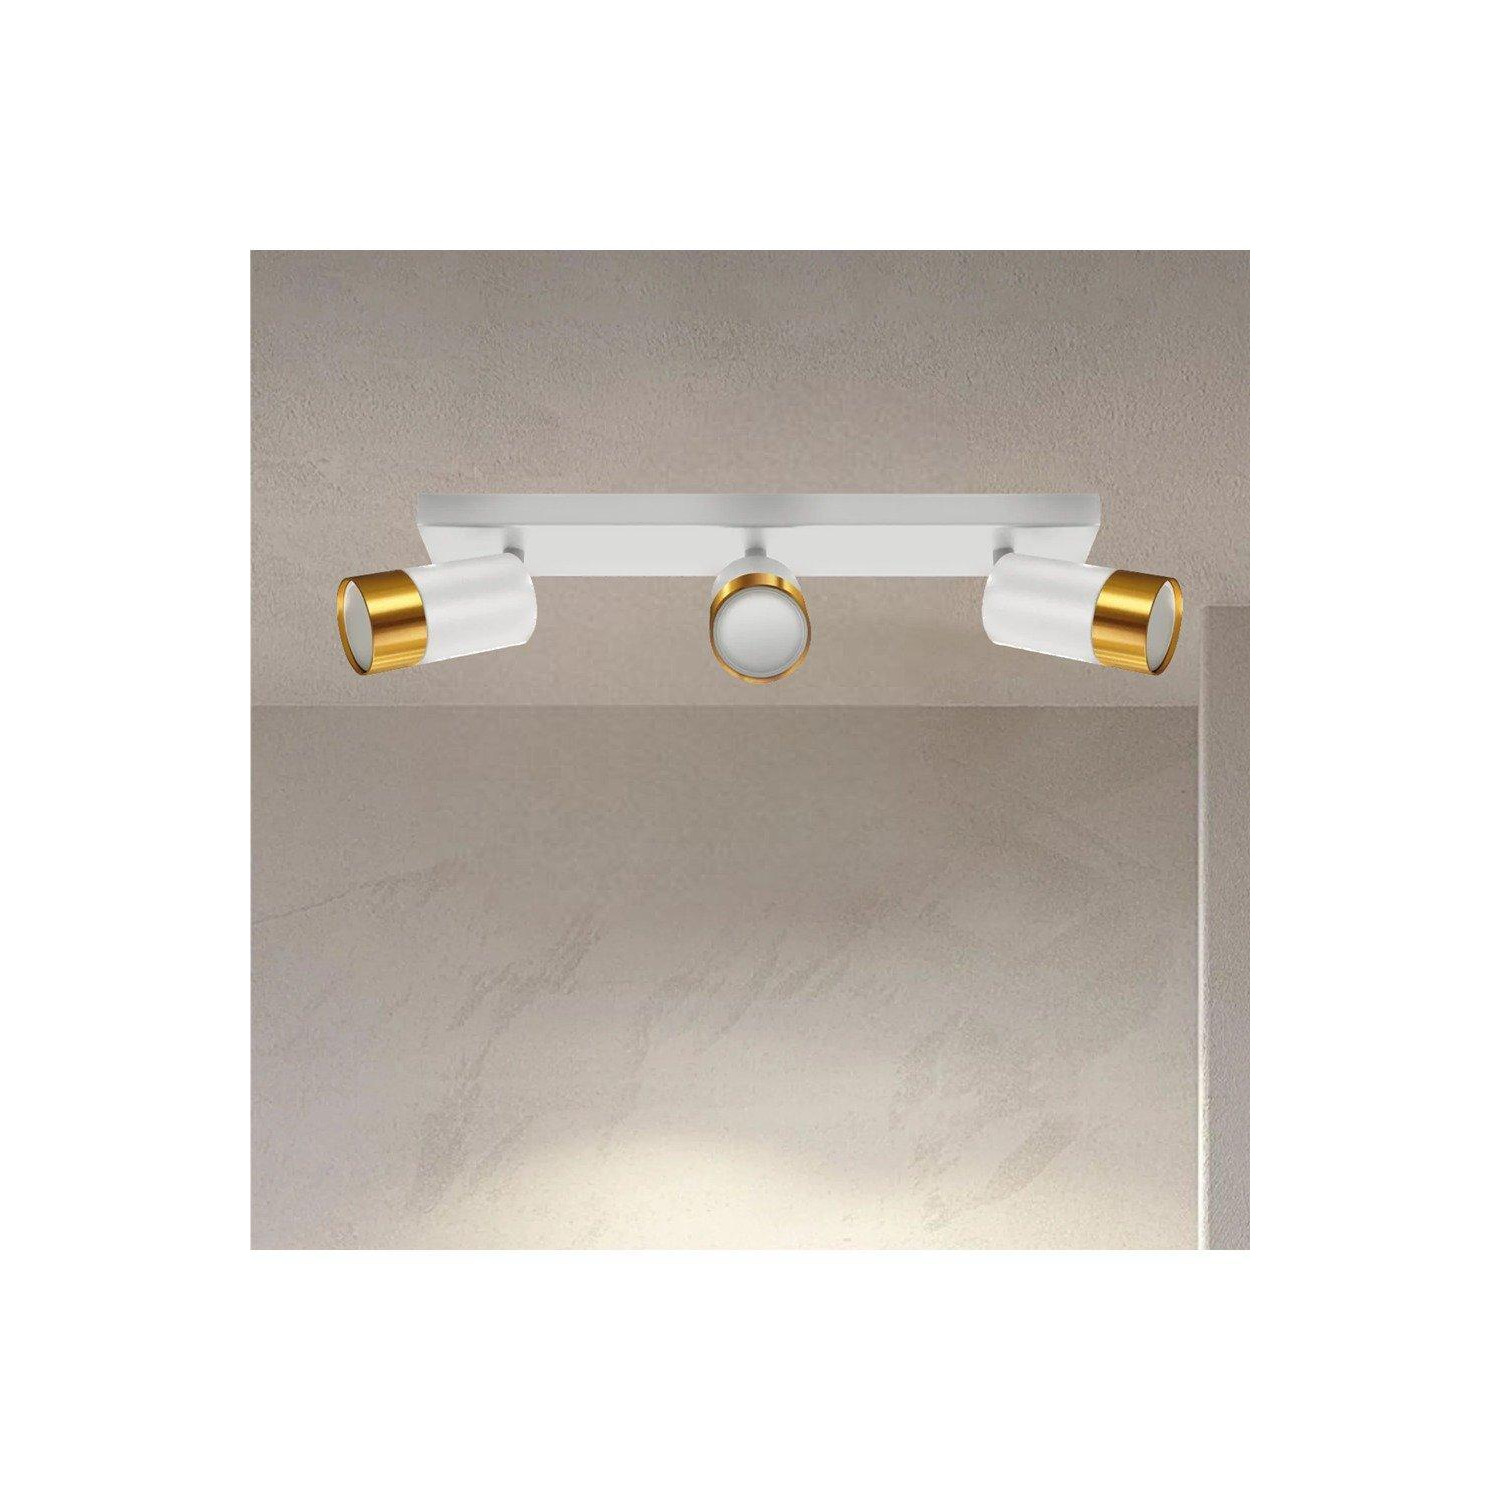 'Puzon'  White & Gold GU10 Adjustable Triple Three Head GU10 Ceiling Spotlight Bar Light - image 1